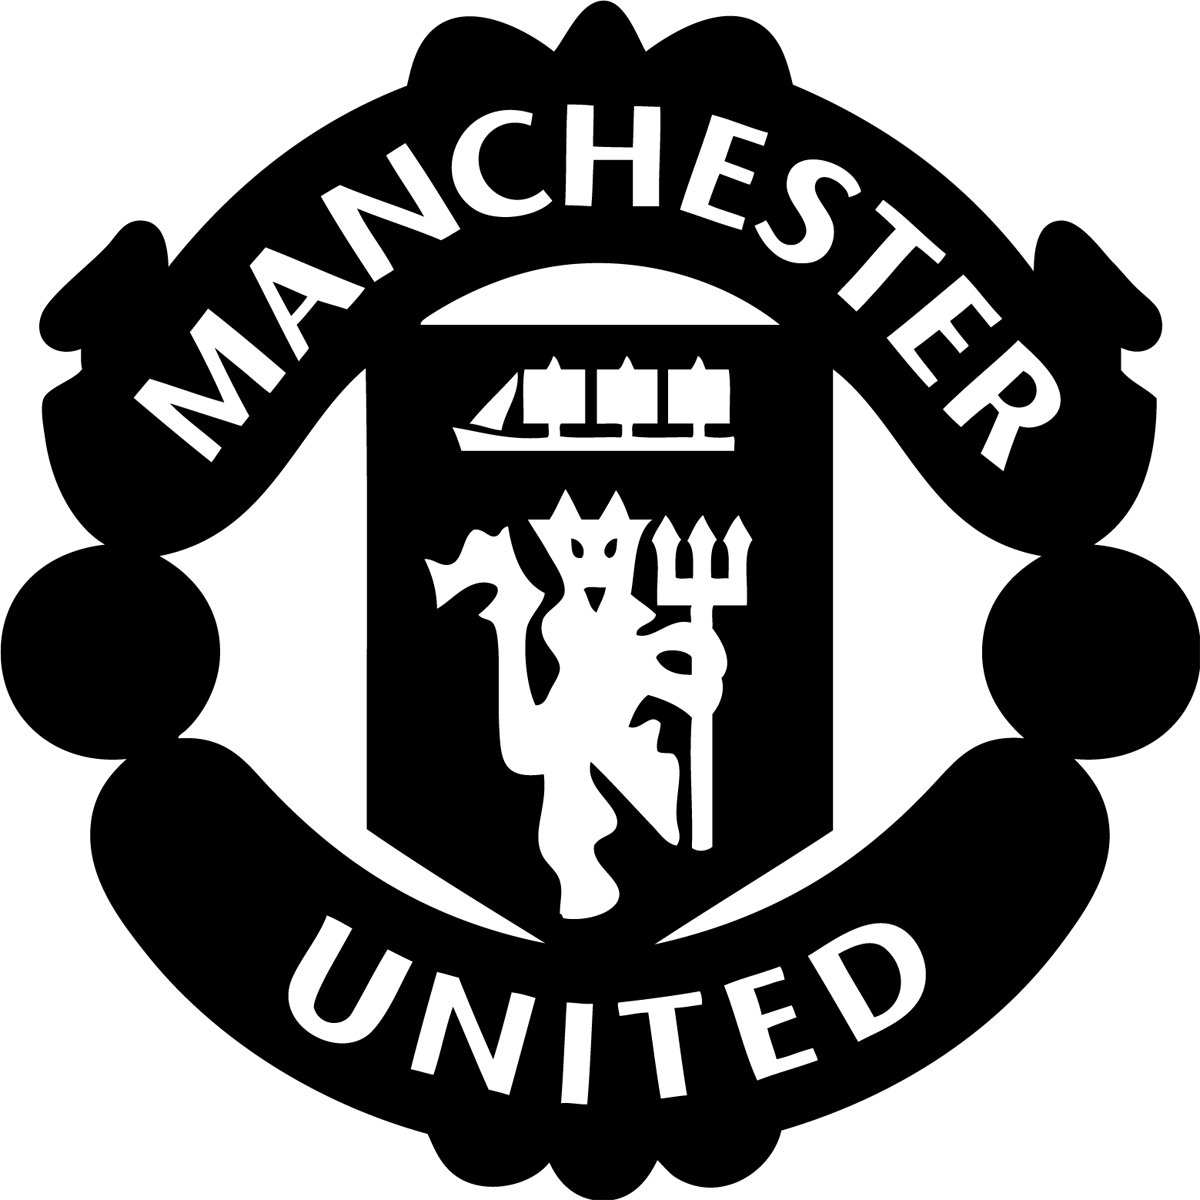 Манчестер Юнайтед эмблема